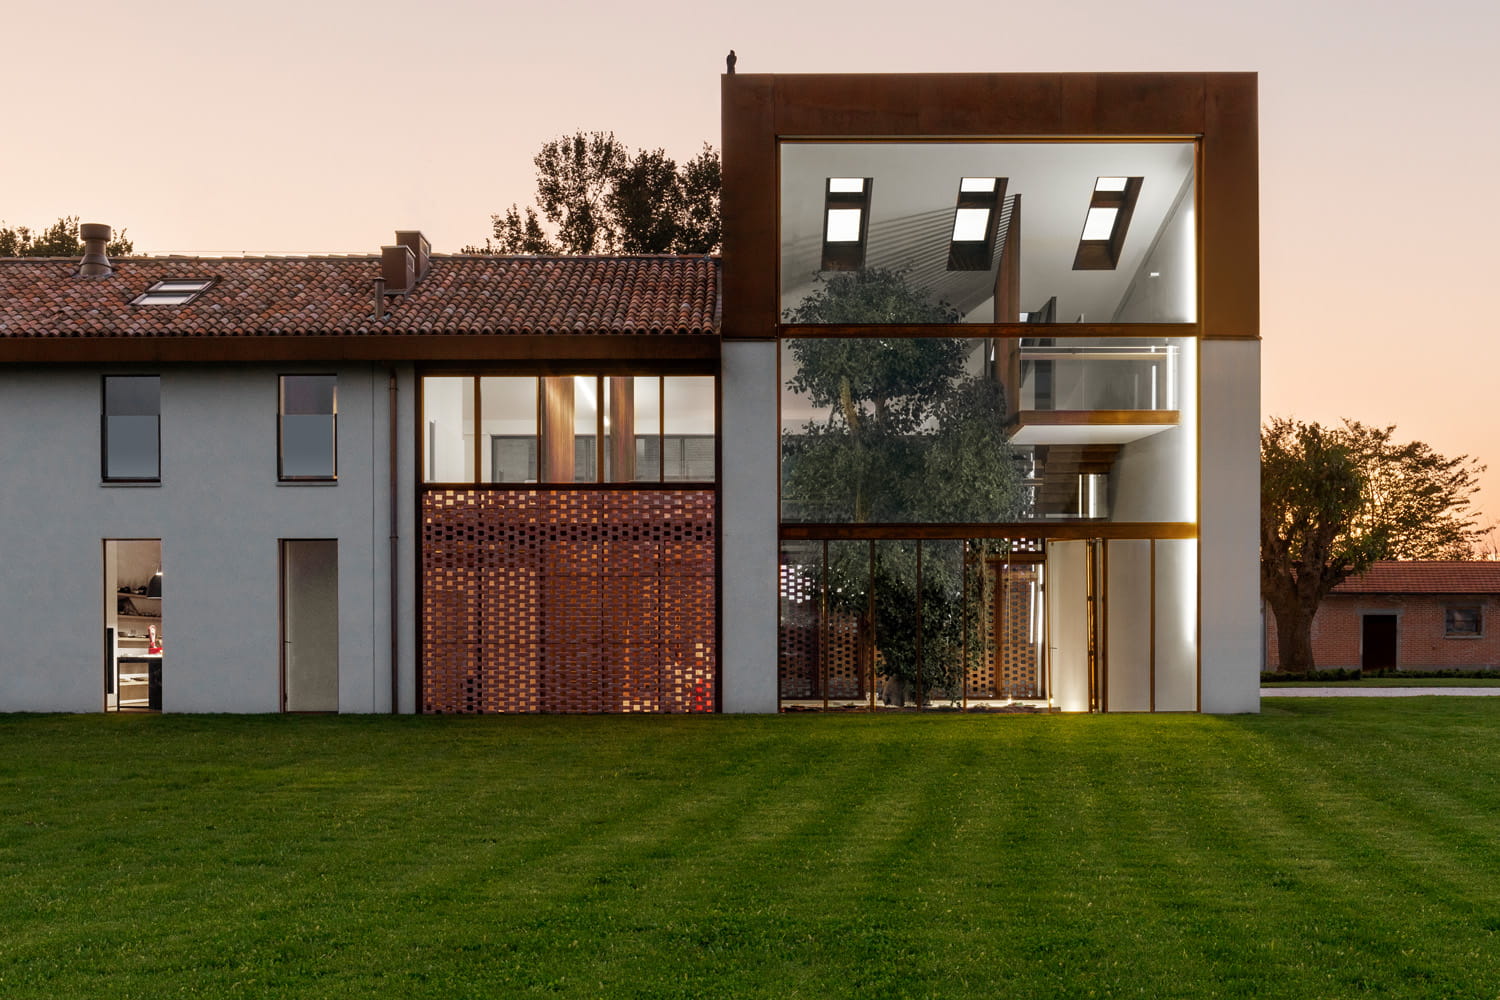 Greenery designed by Carlo Ratti and Italo Rota